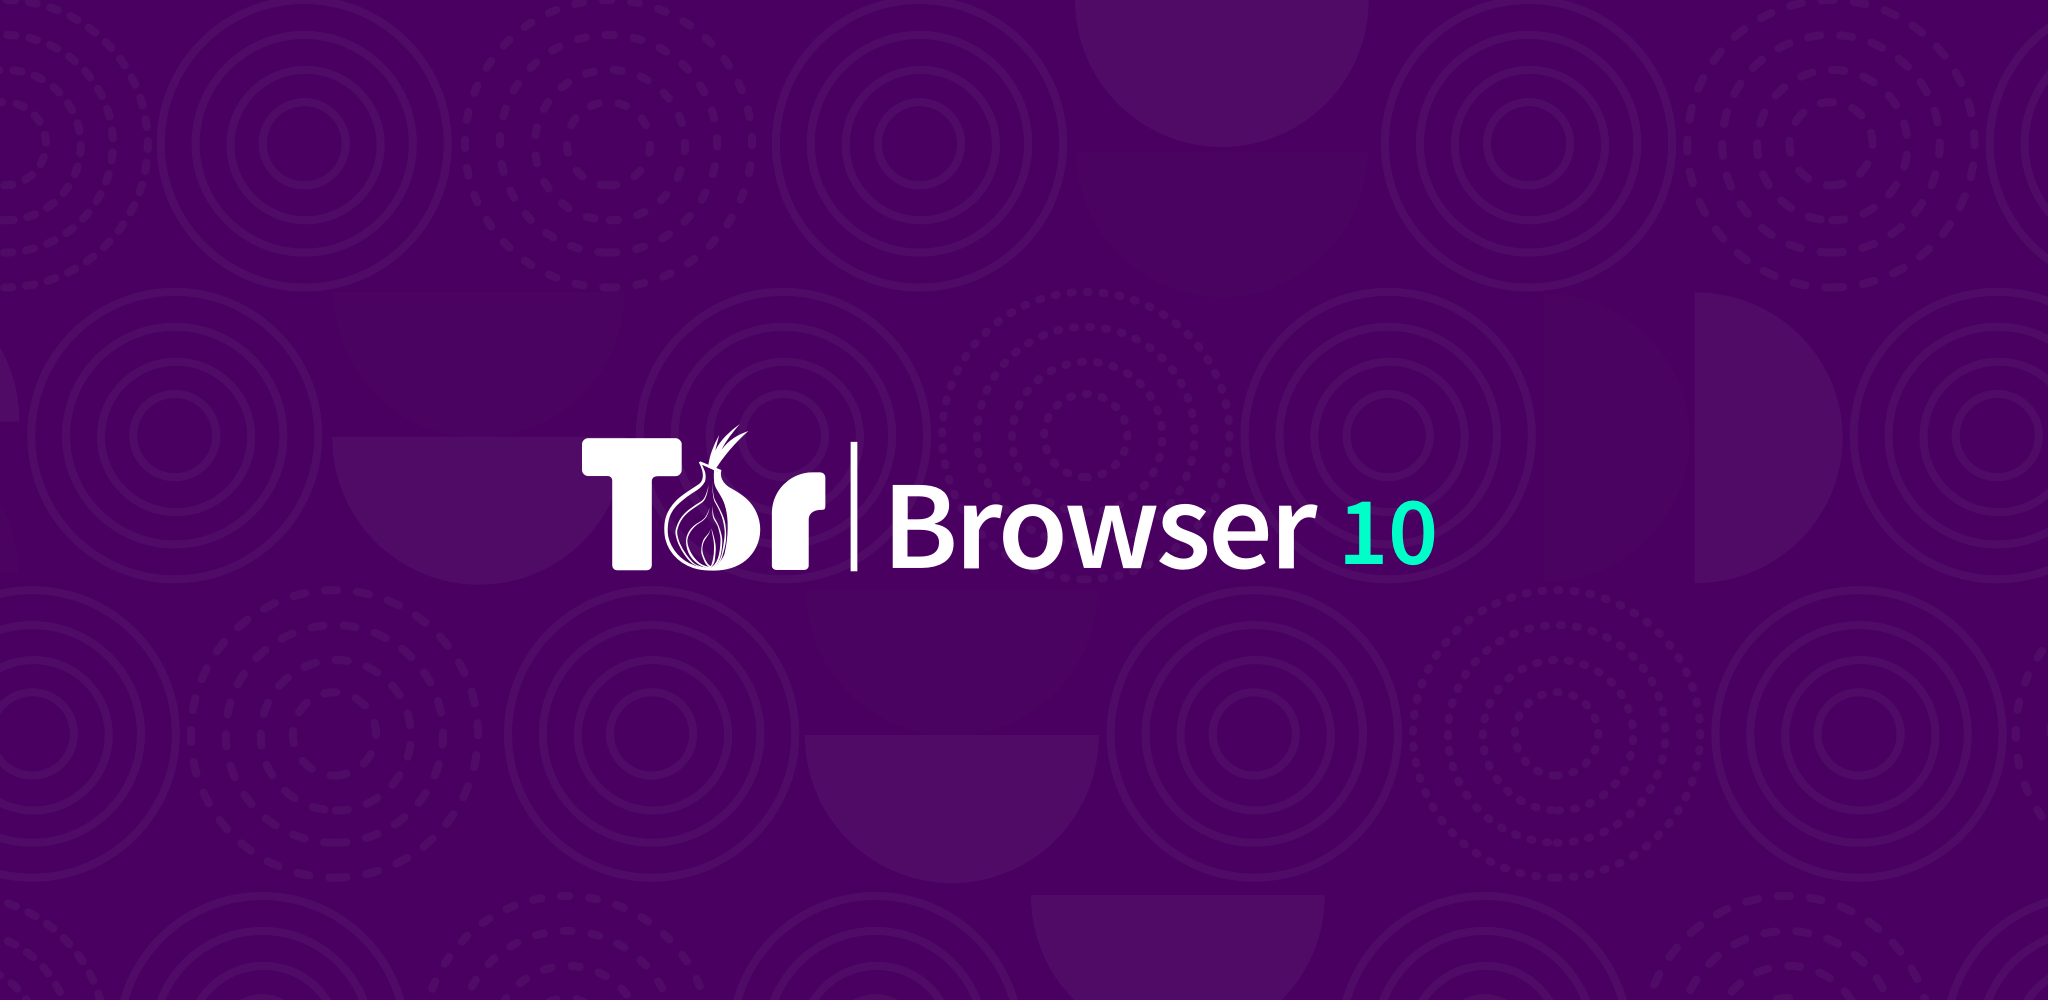 установить tor browser для андроид hyrda